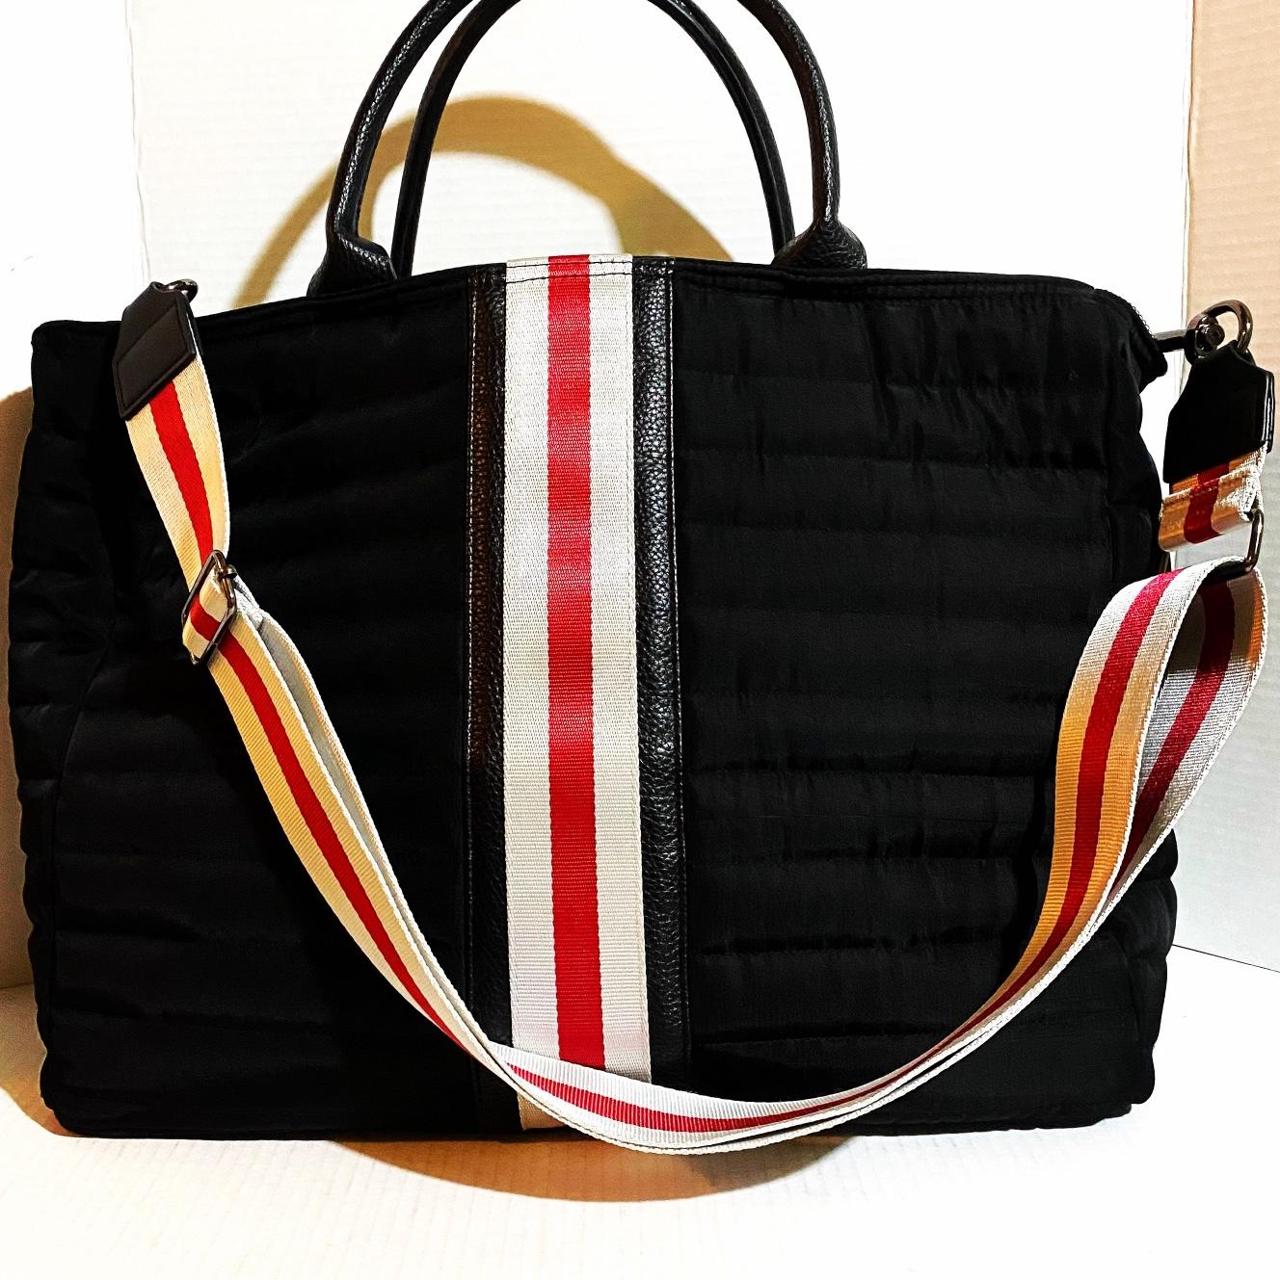 Think Royln Parisian Tote bag Black W/ Red & Silver Stripe